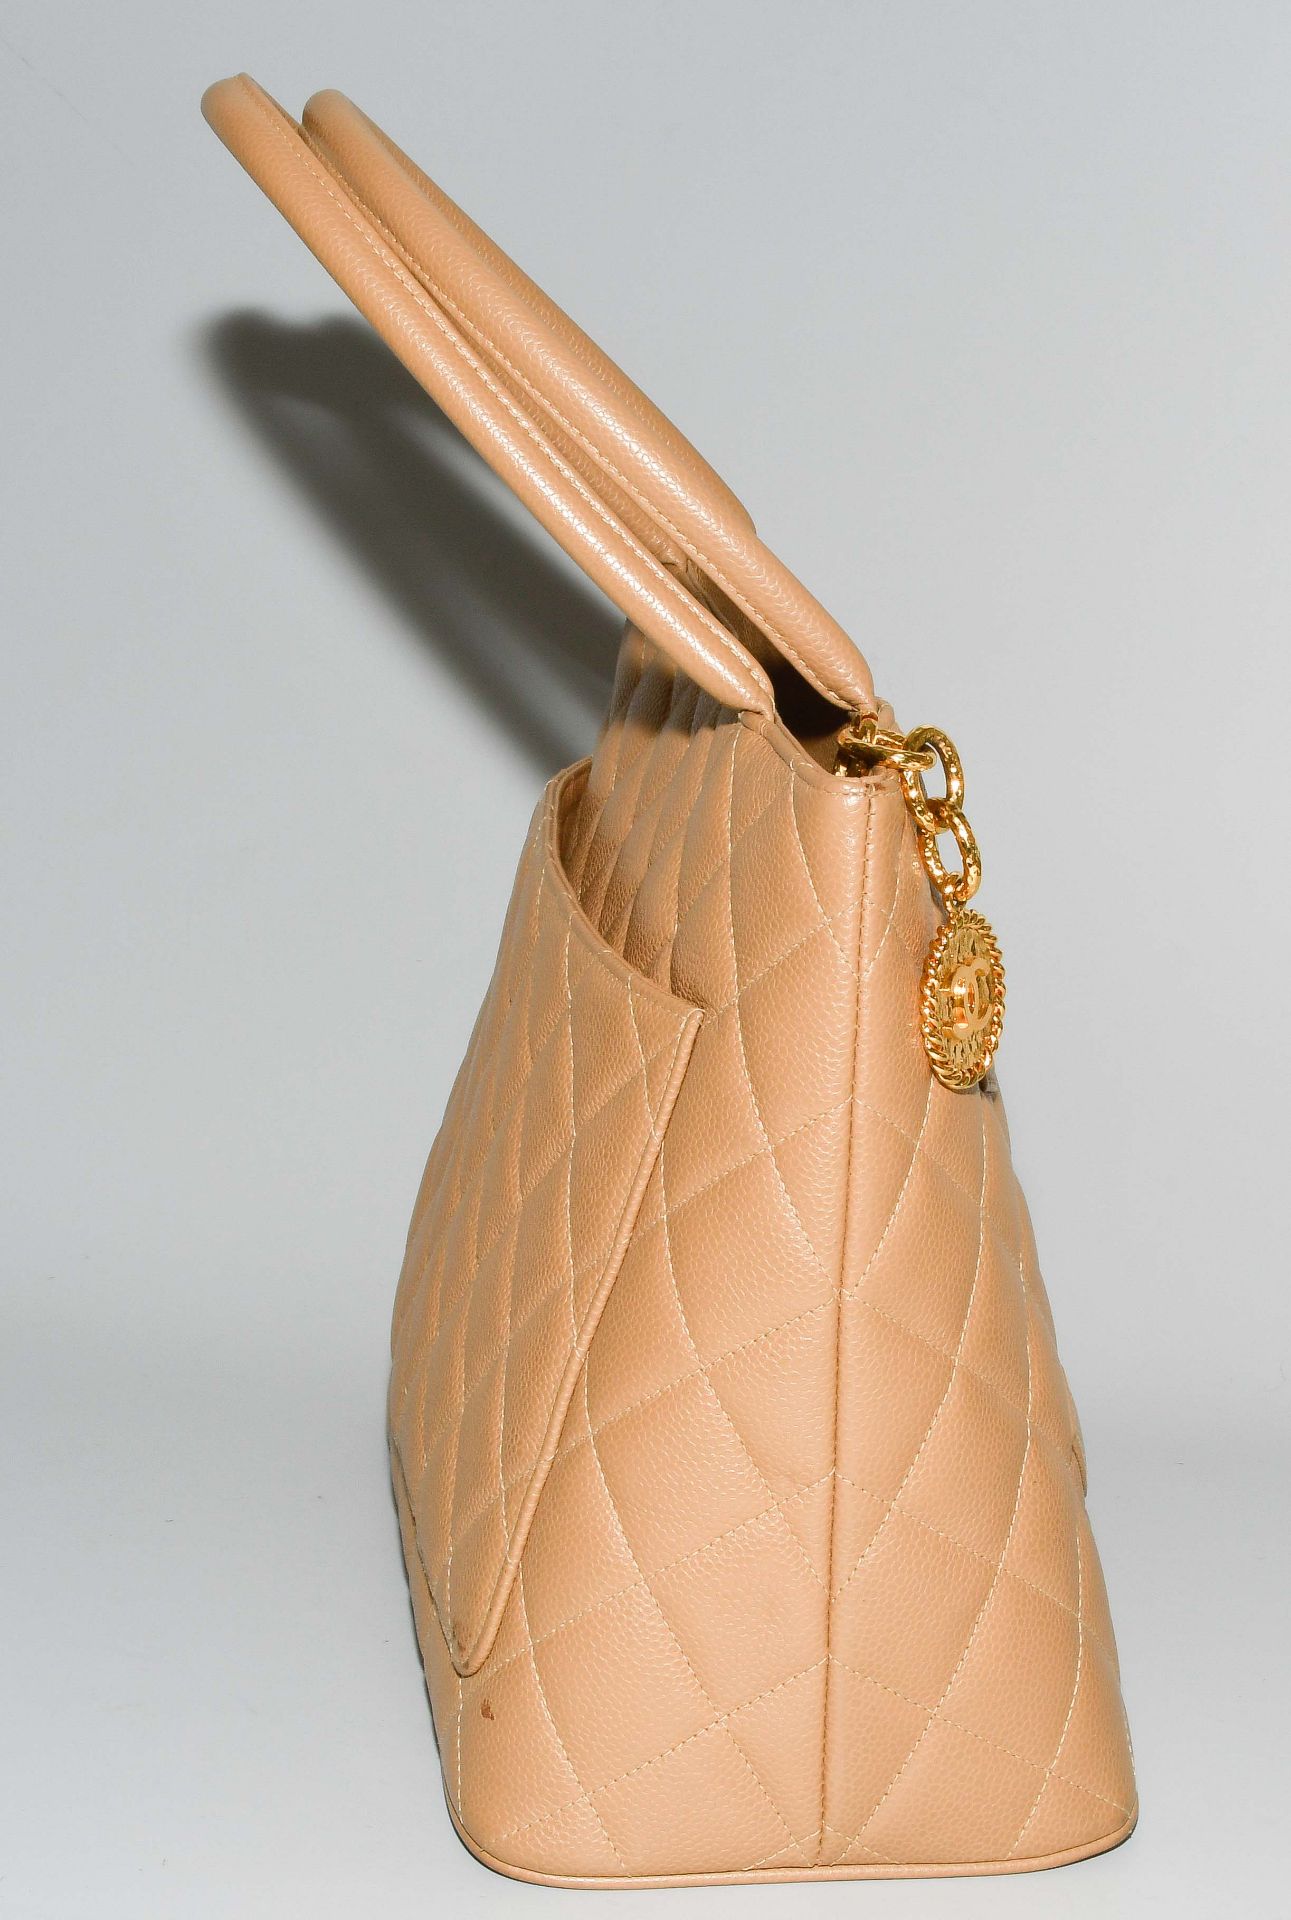 Chanel, Handtasche "Medaillon" - Image 5 of 10